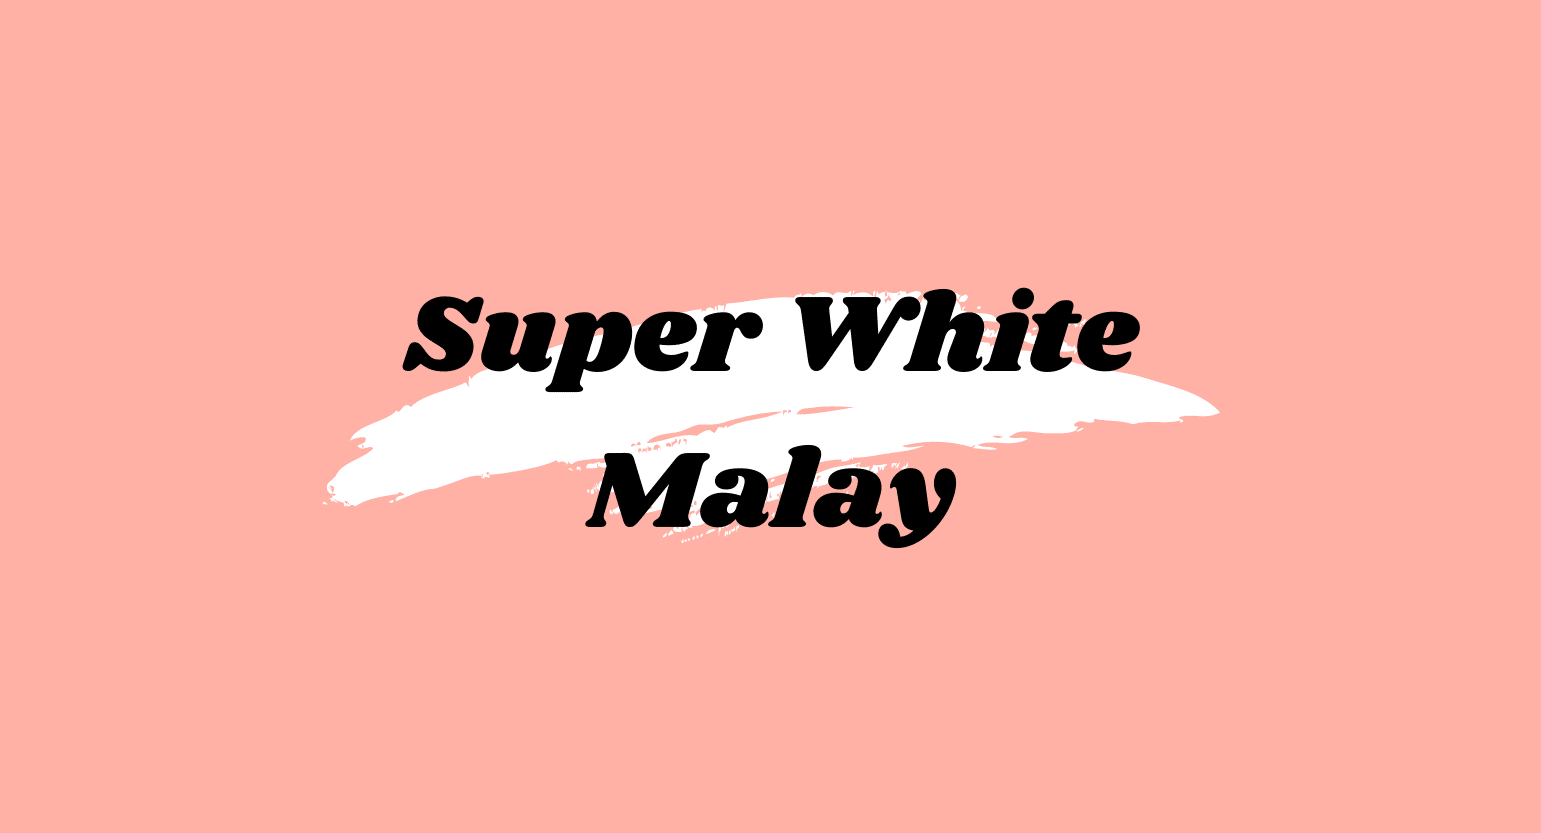 Super White Malay: Uplifting and Euphoric